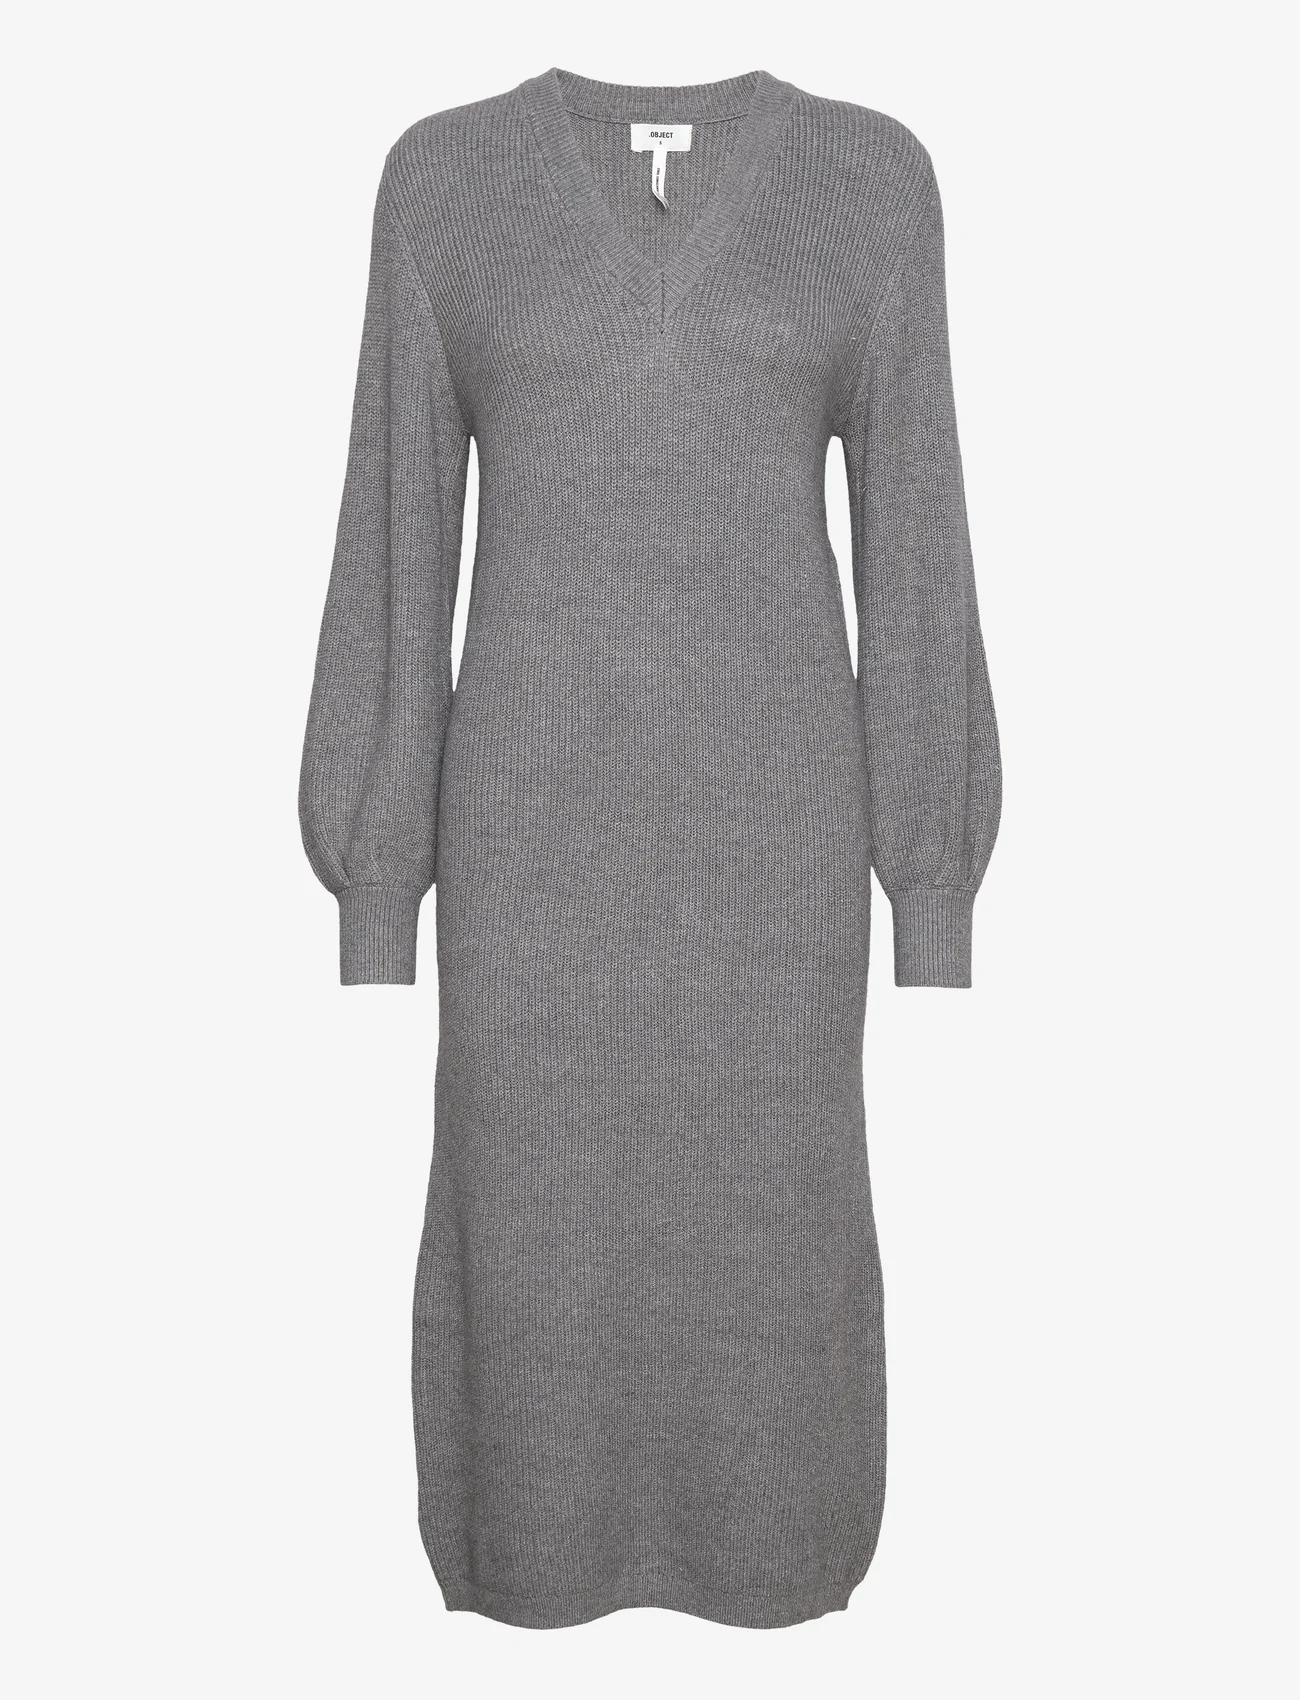 Object - OBJMALENA L/S KNIT DRESS - stramme kjoler - medium grey melange - 0